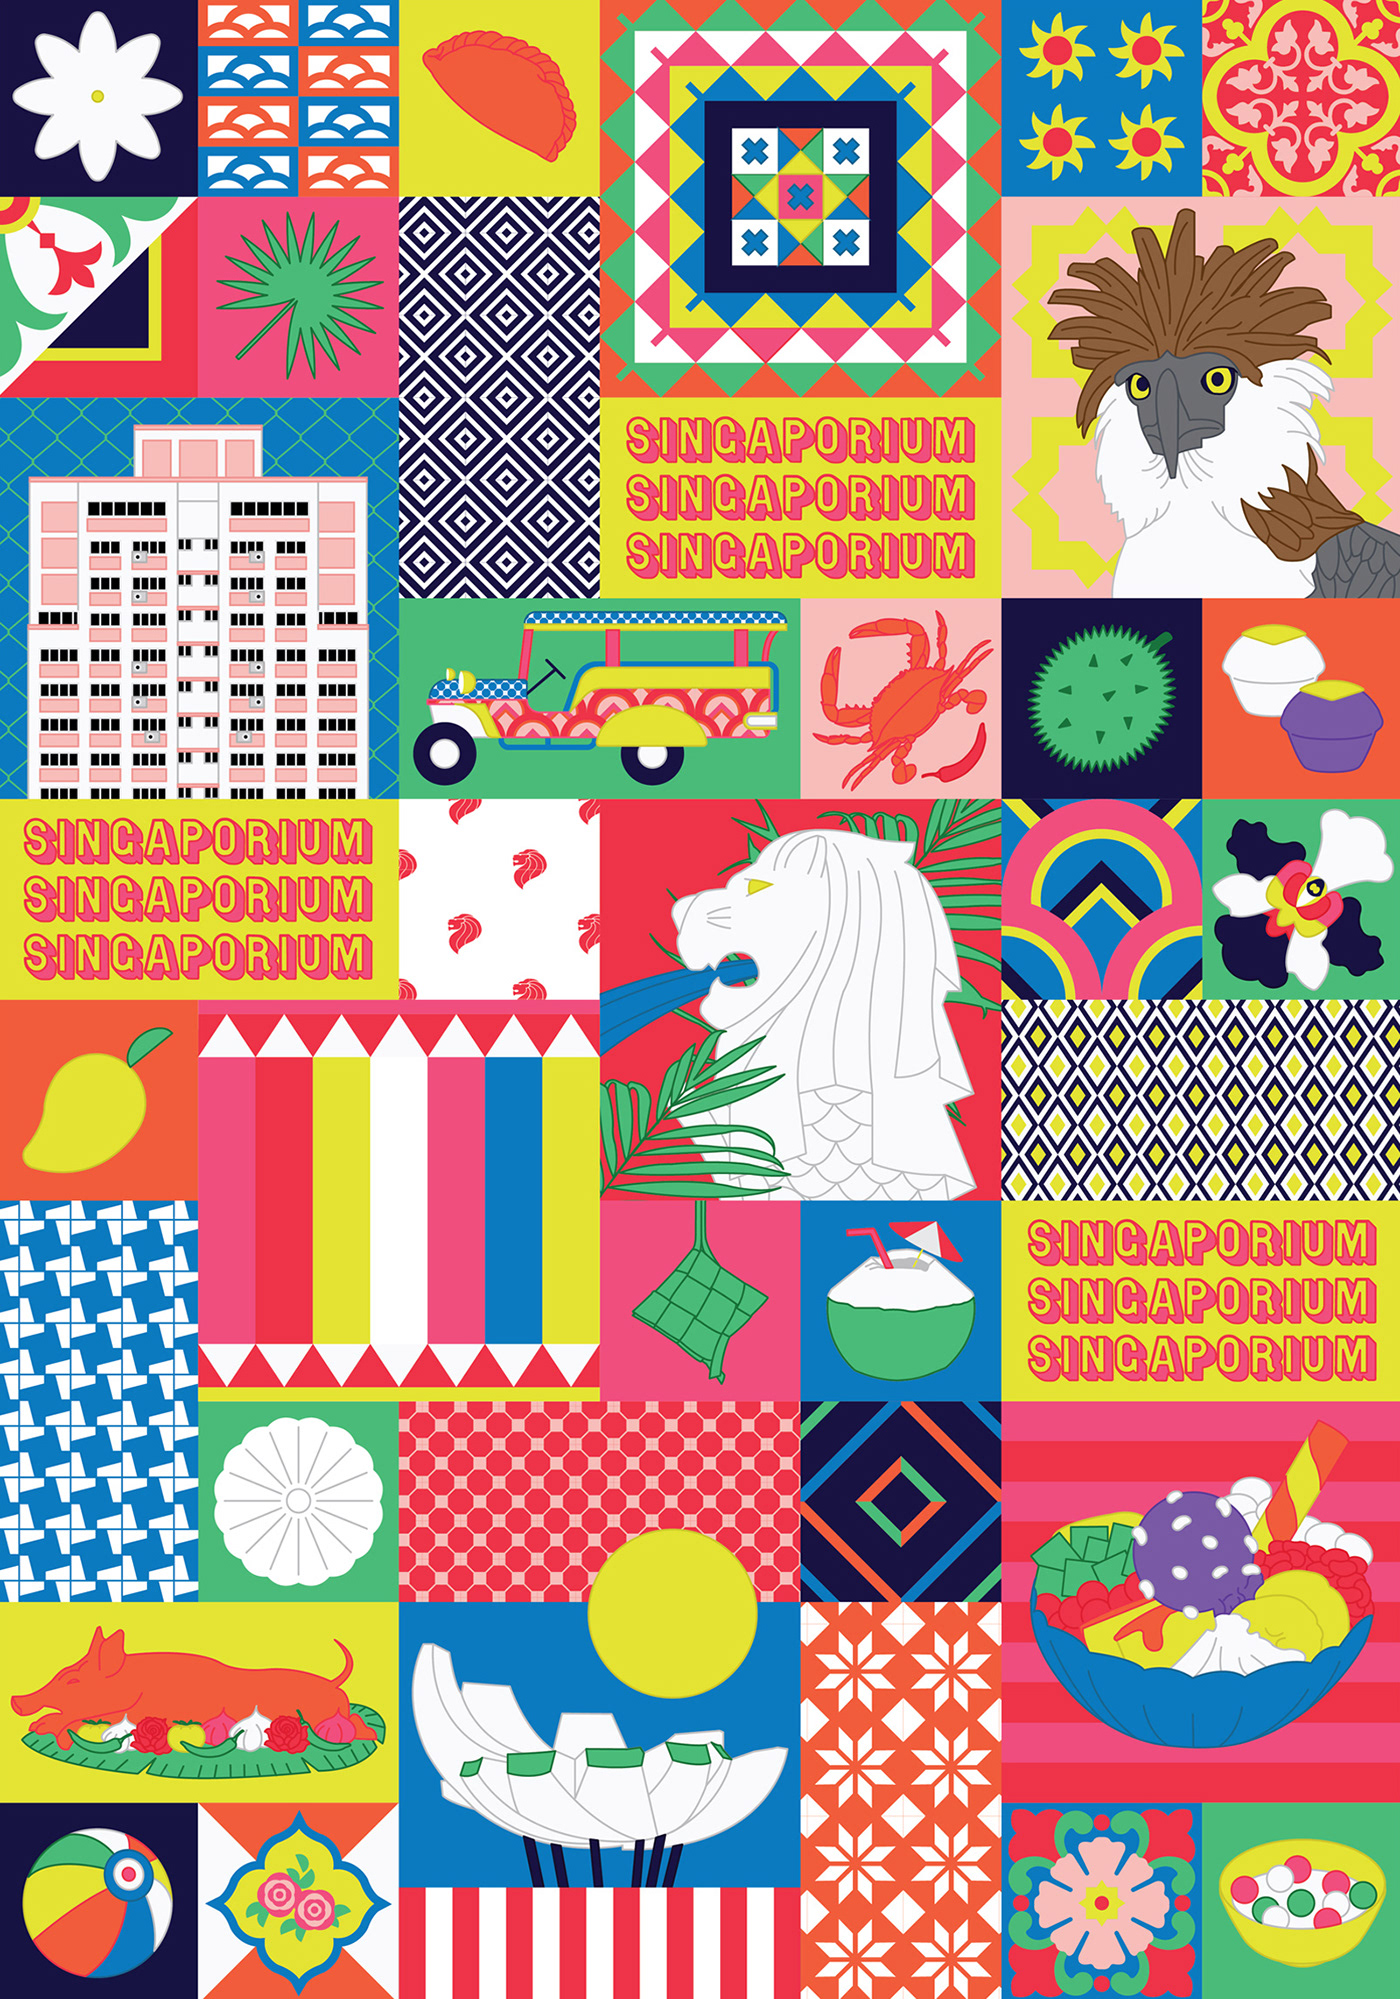 pop up Singaporium singapore Manila Colourful  grid Patterns icons Fun lifestyle